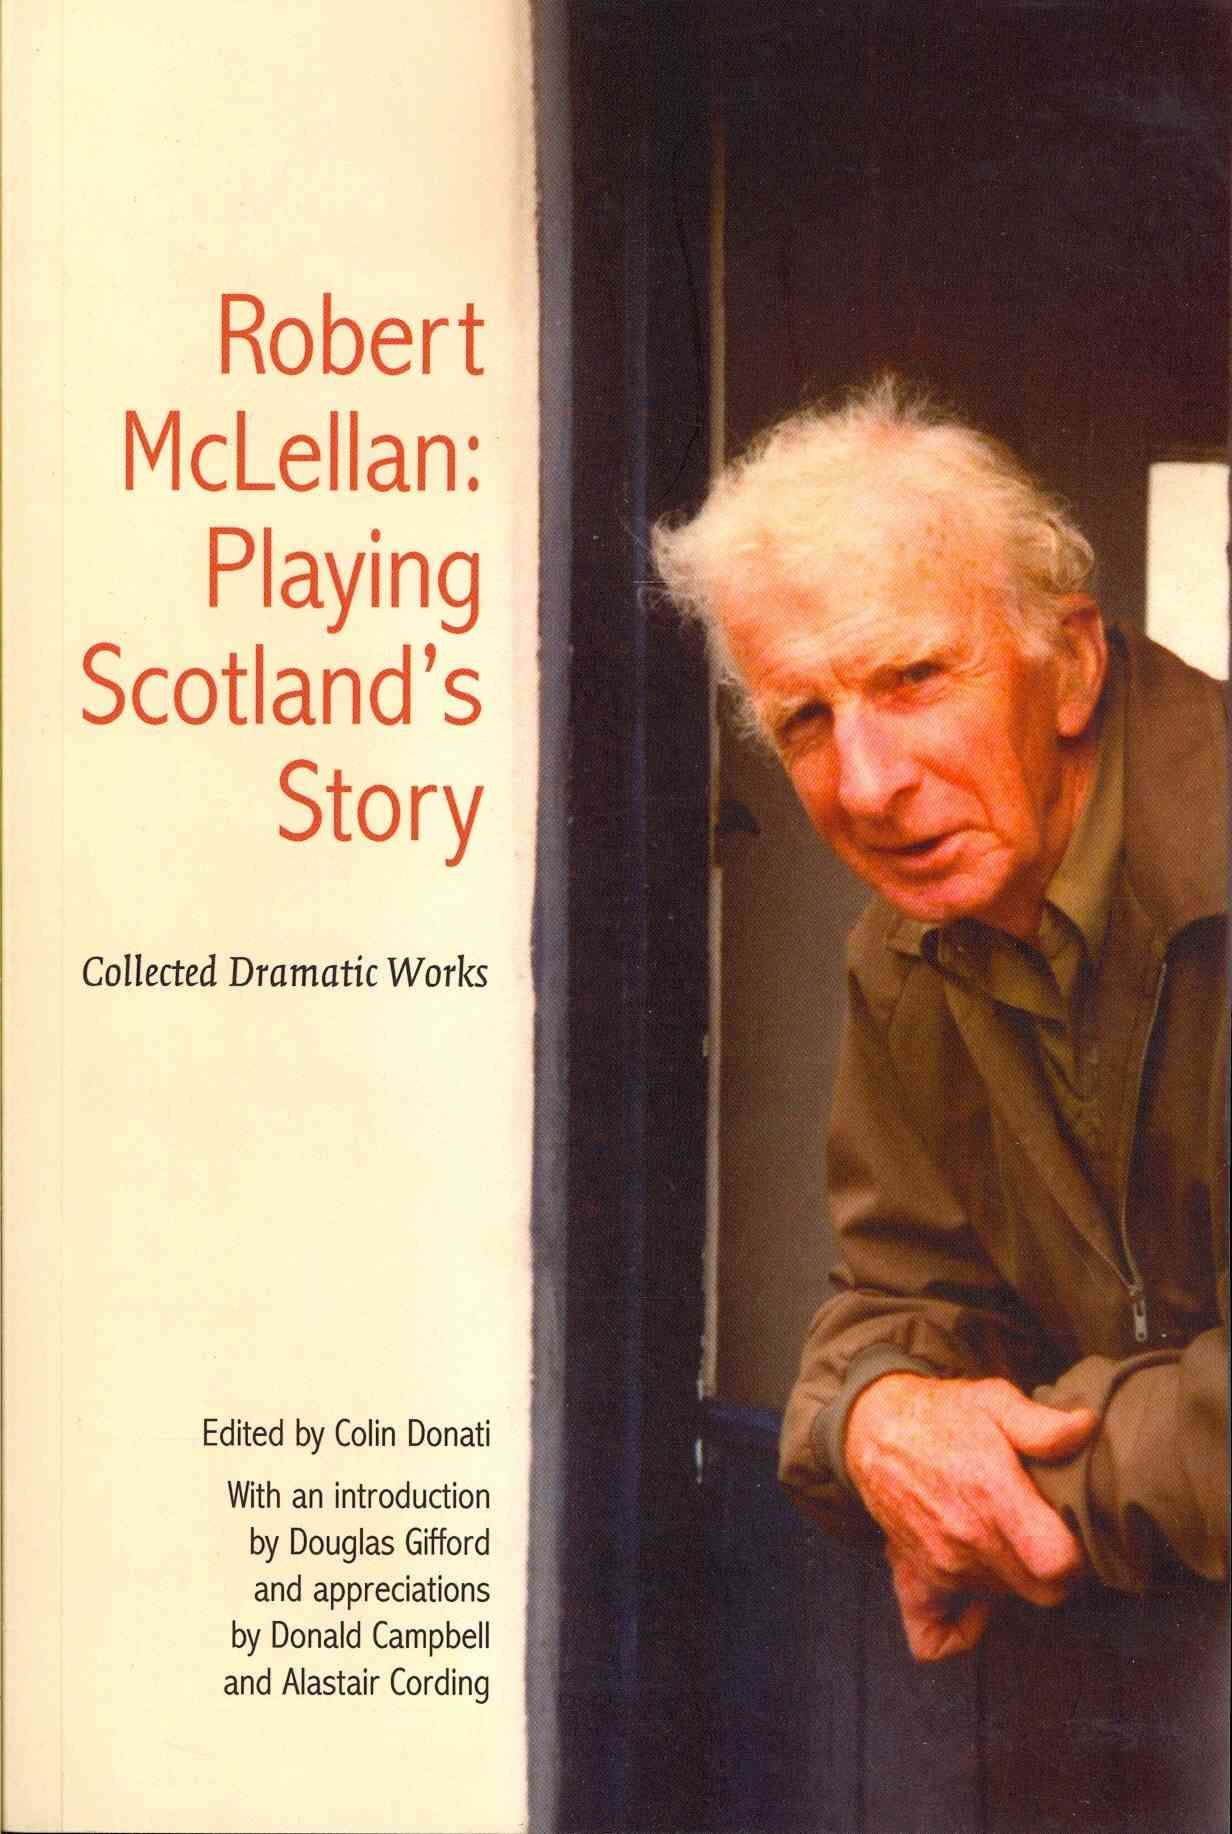 Robert McLellan, Playing Scotland's Story